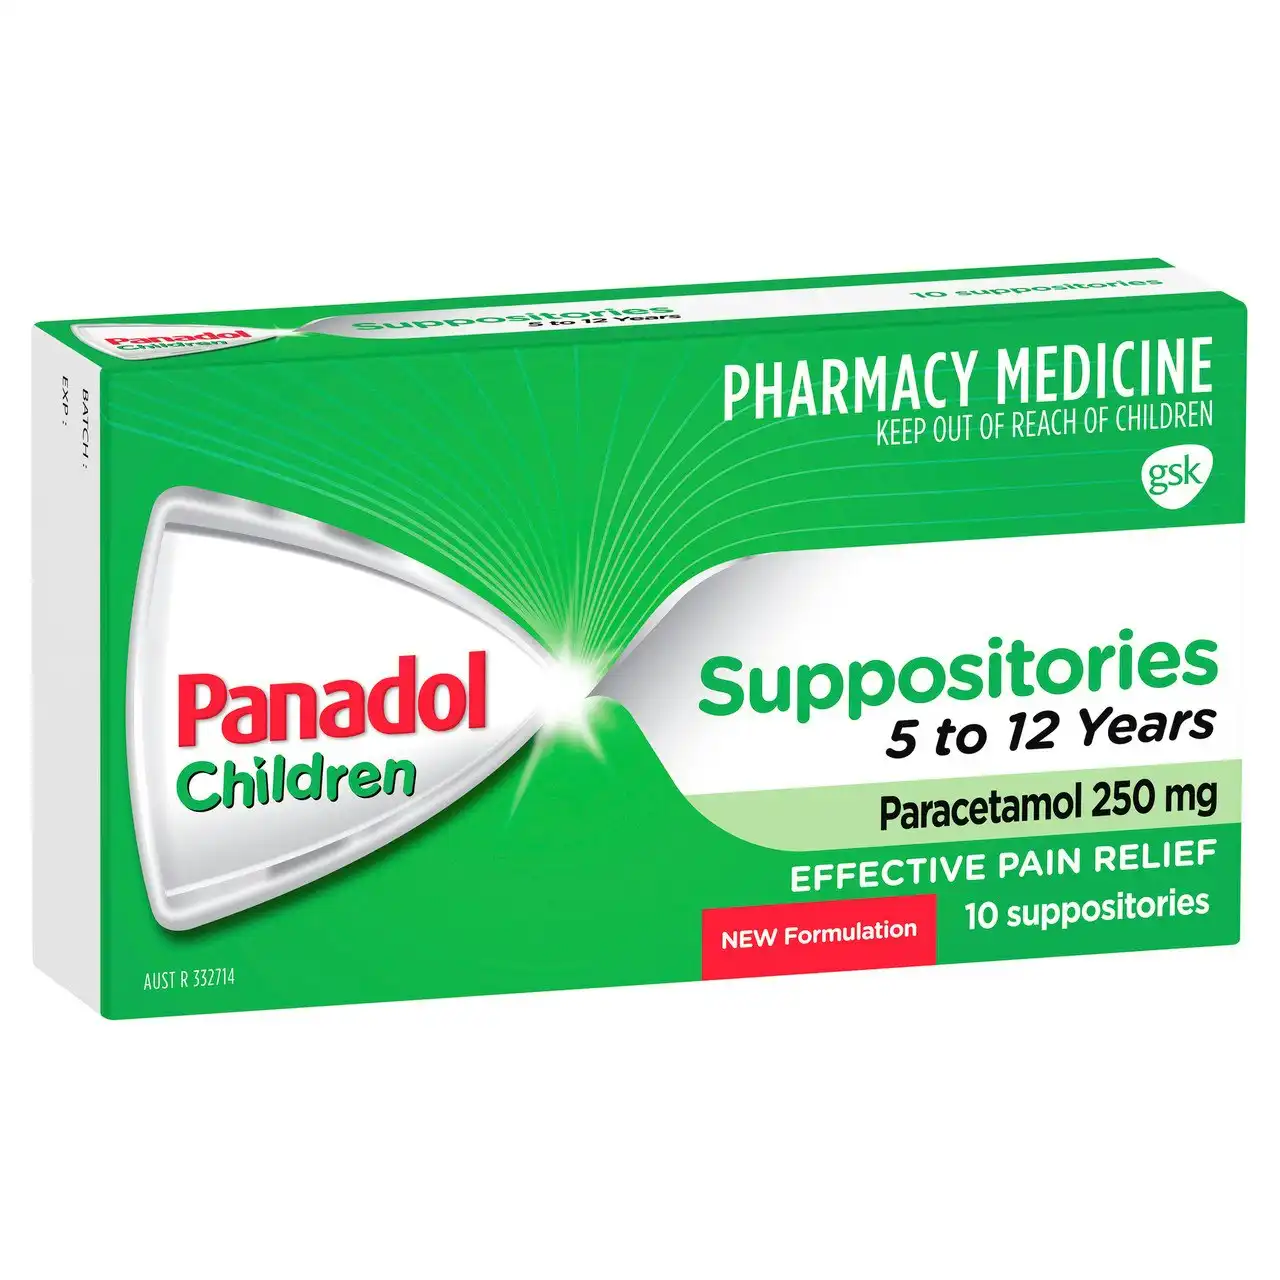 Panadol Children Suppositories 5-12 Years, 250mg 10 Pack